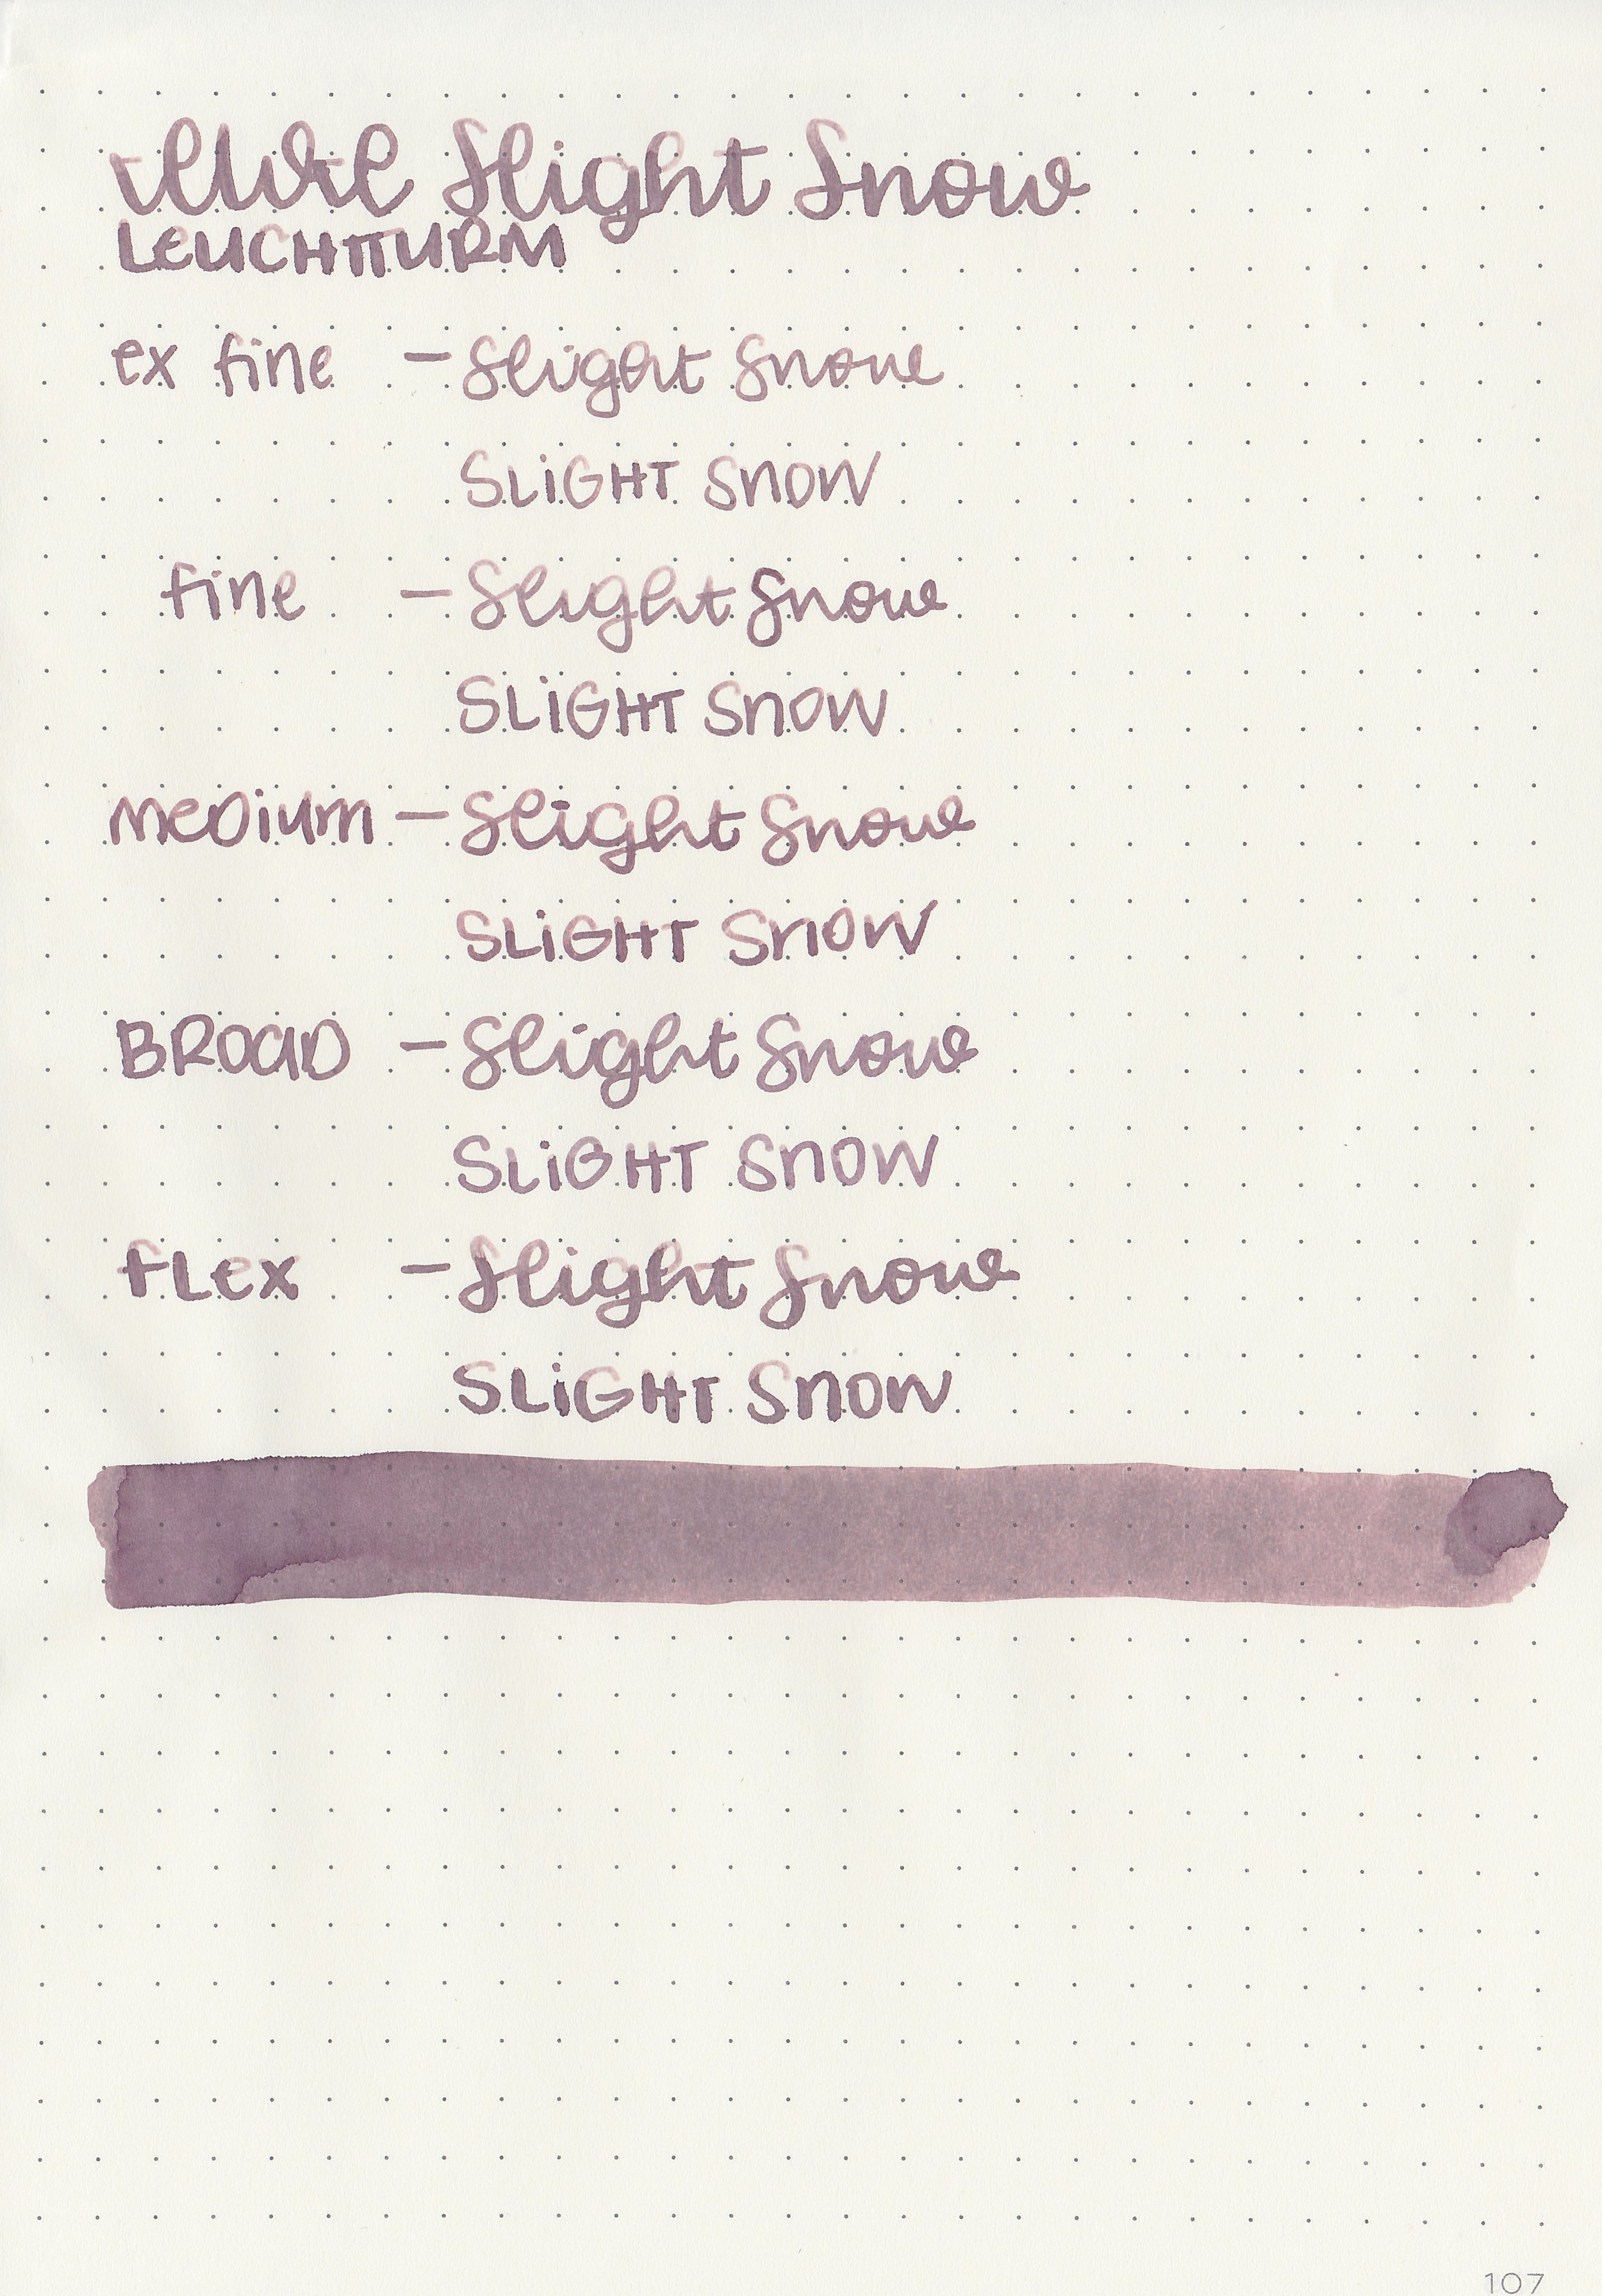 iwi-slight-snow-9.jpg